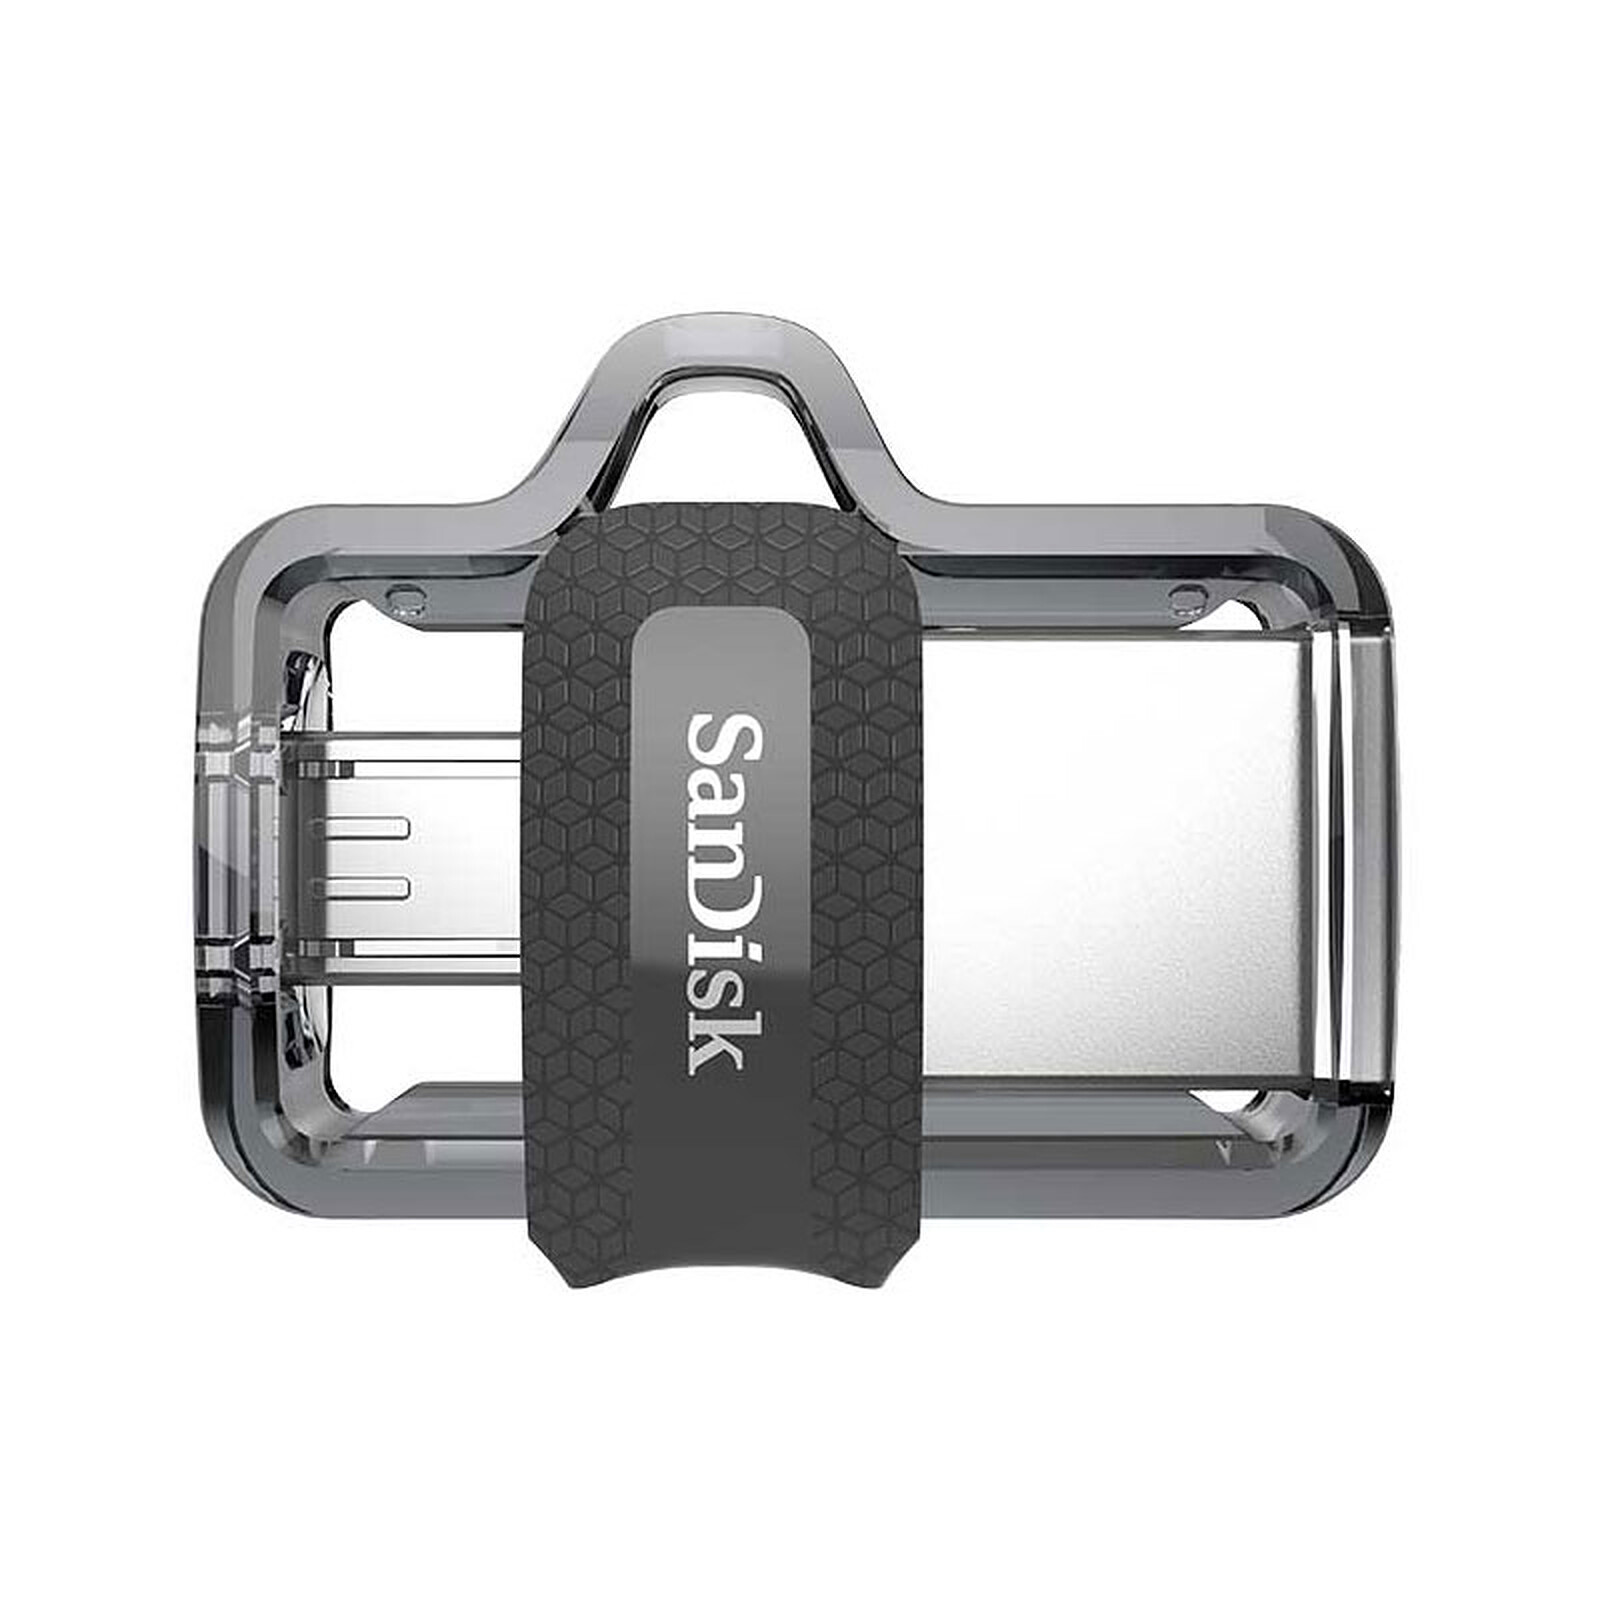 Sandisk Ultra Dual USB 3.0 16 GB - USB flash drive - LDLC 3-year